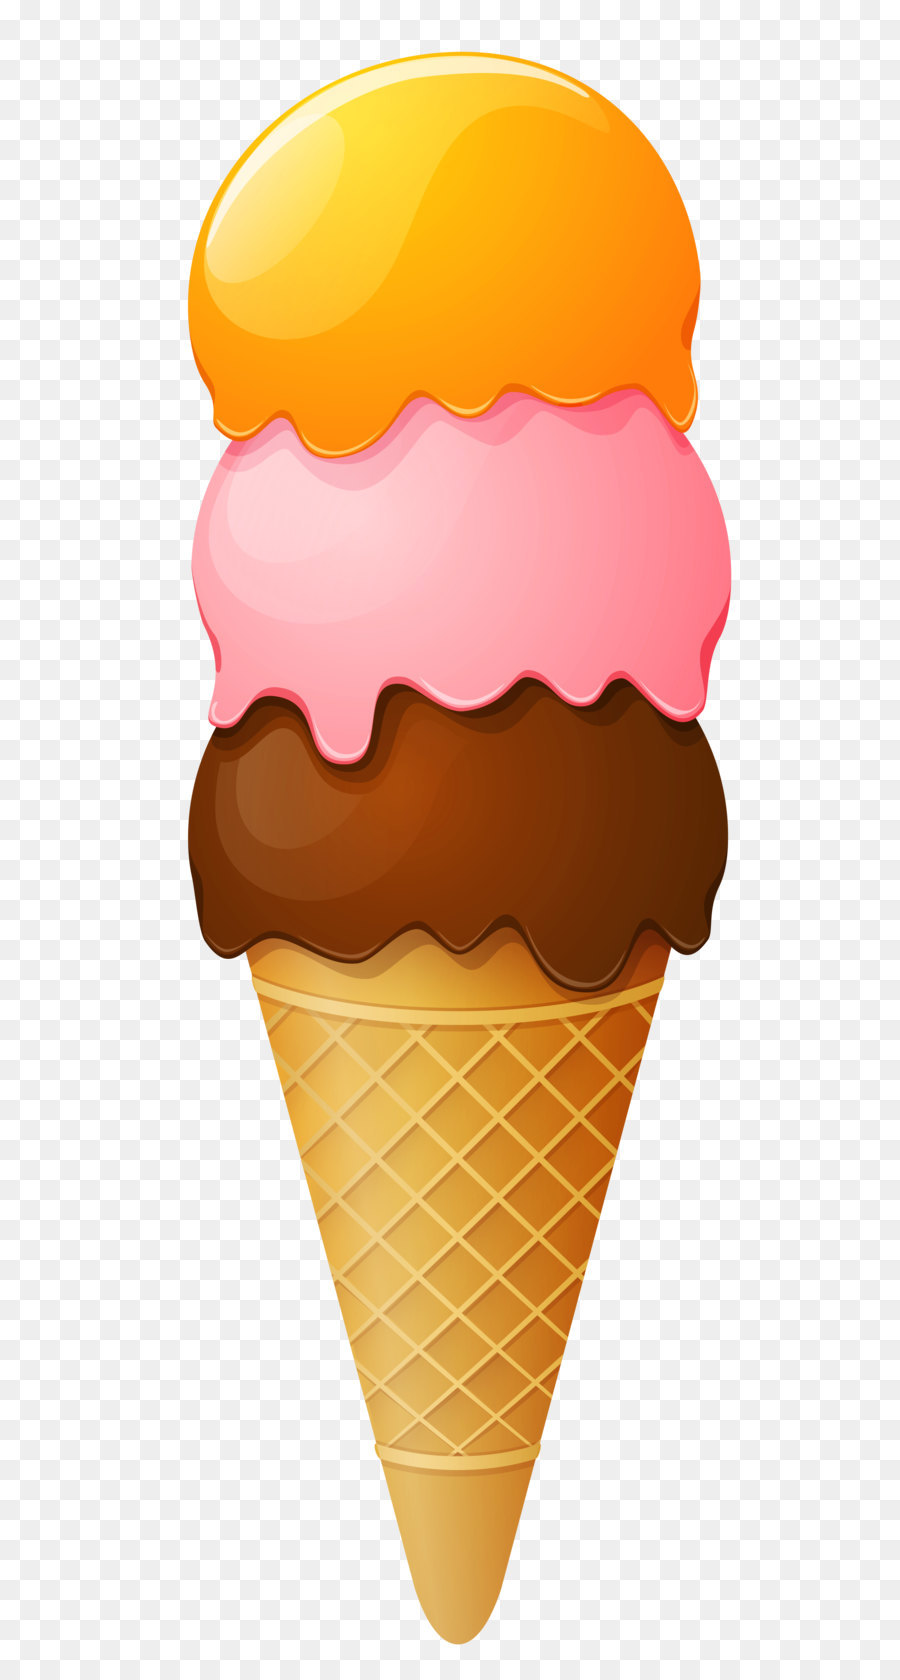 Ice cream cone Sundae Clip art - Transparent Ice Cream Cone PNG Clipart Picture png download - 1907*4882 - Free Transparent Ice Cream png Download.